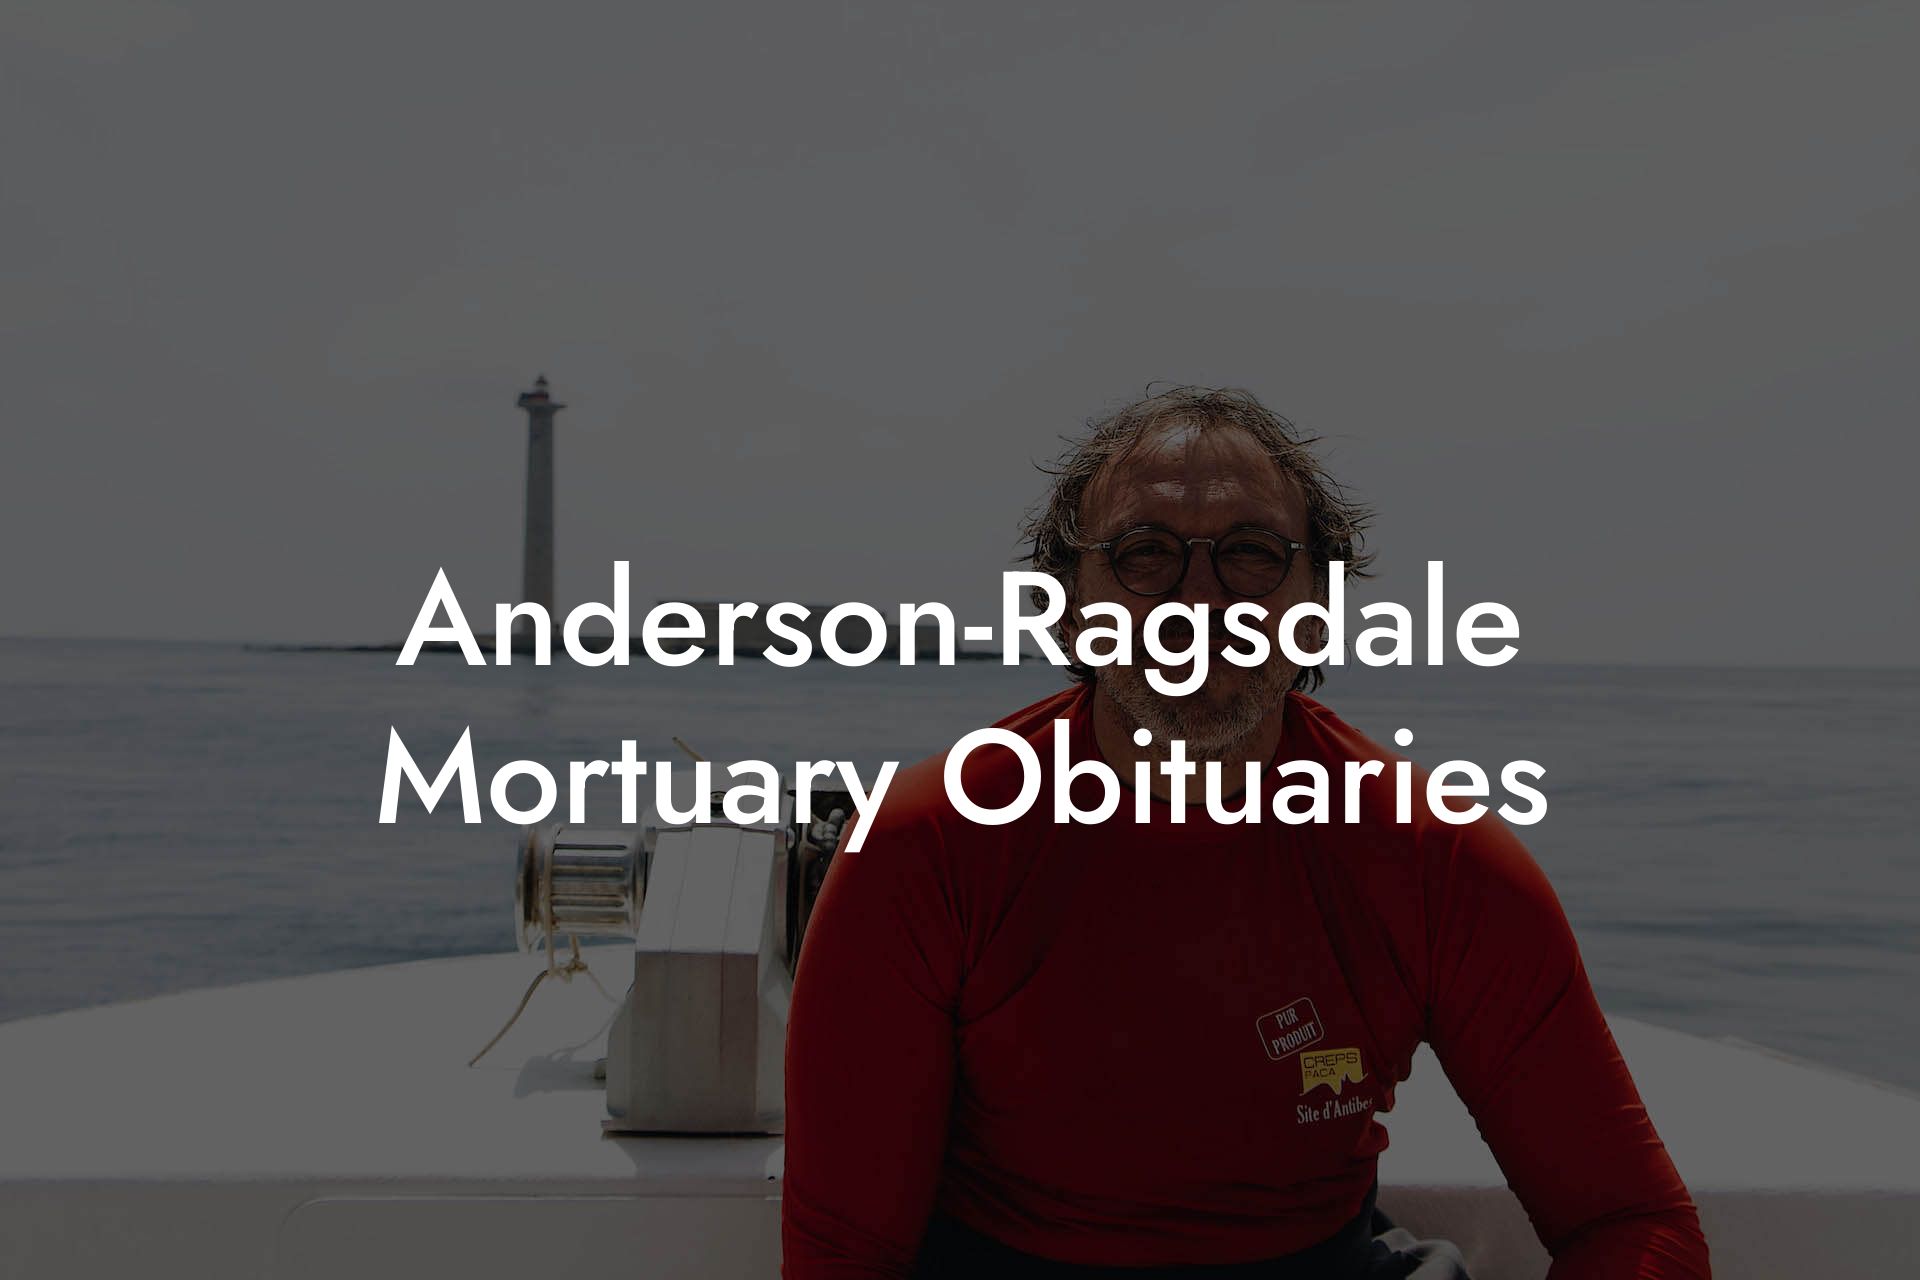 Anderson-Ragsdale Mortuary Obituaries